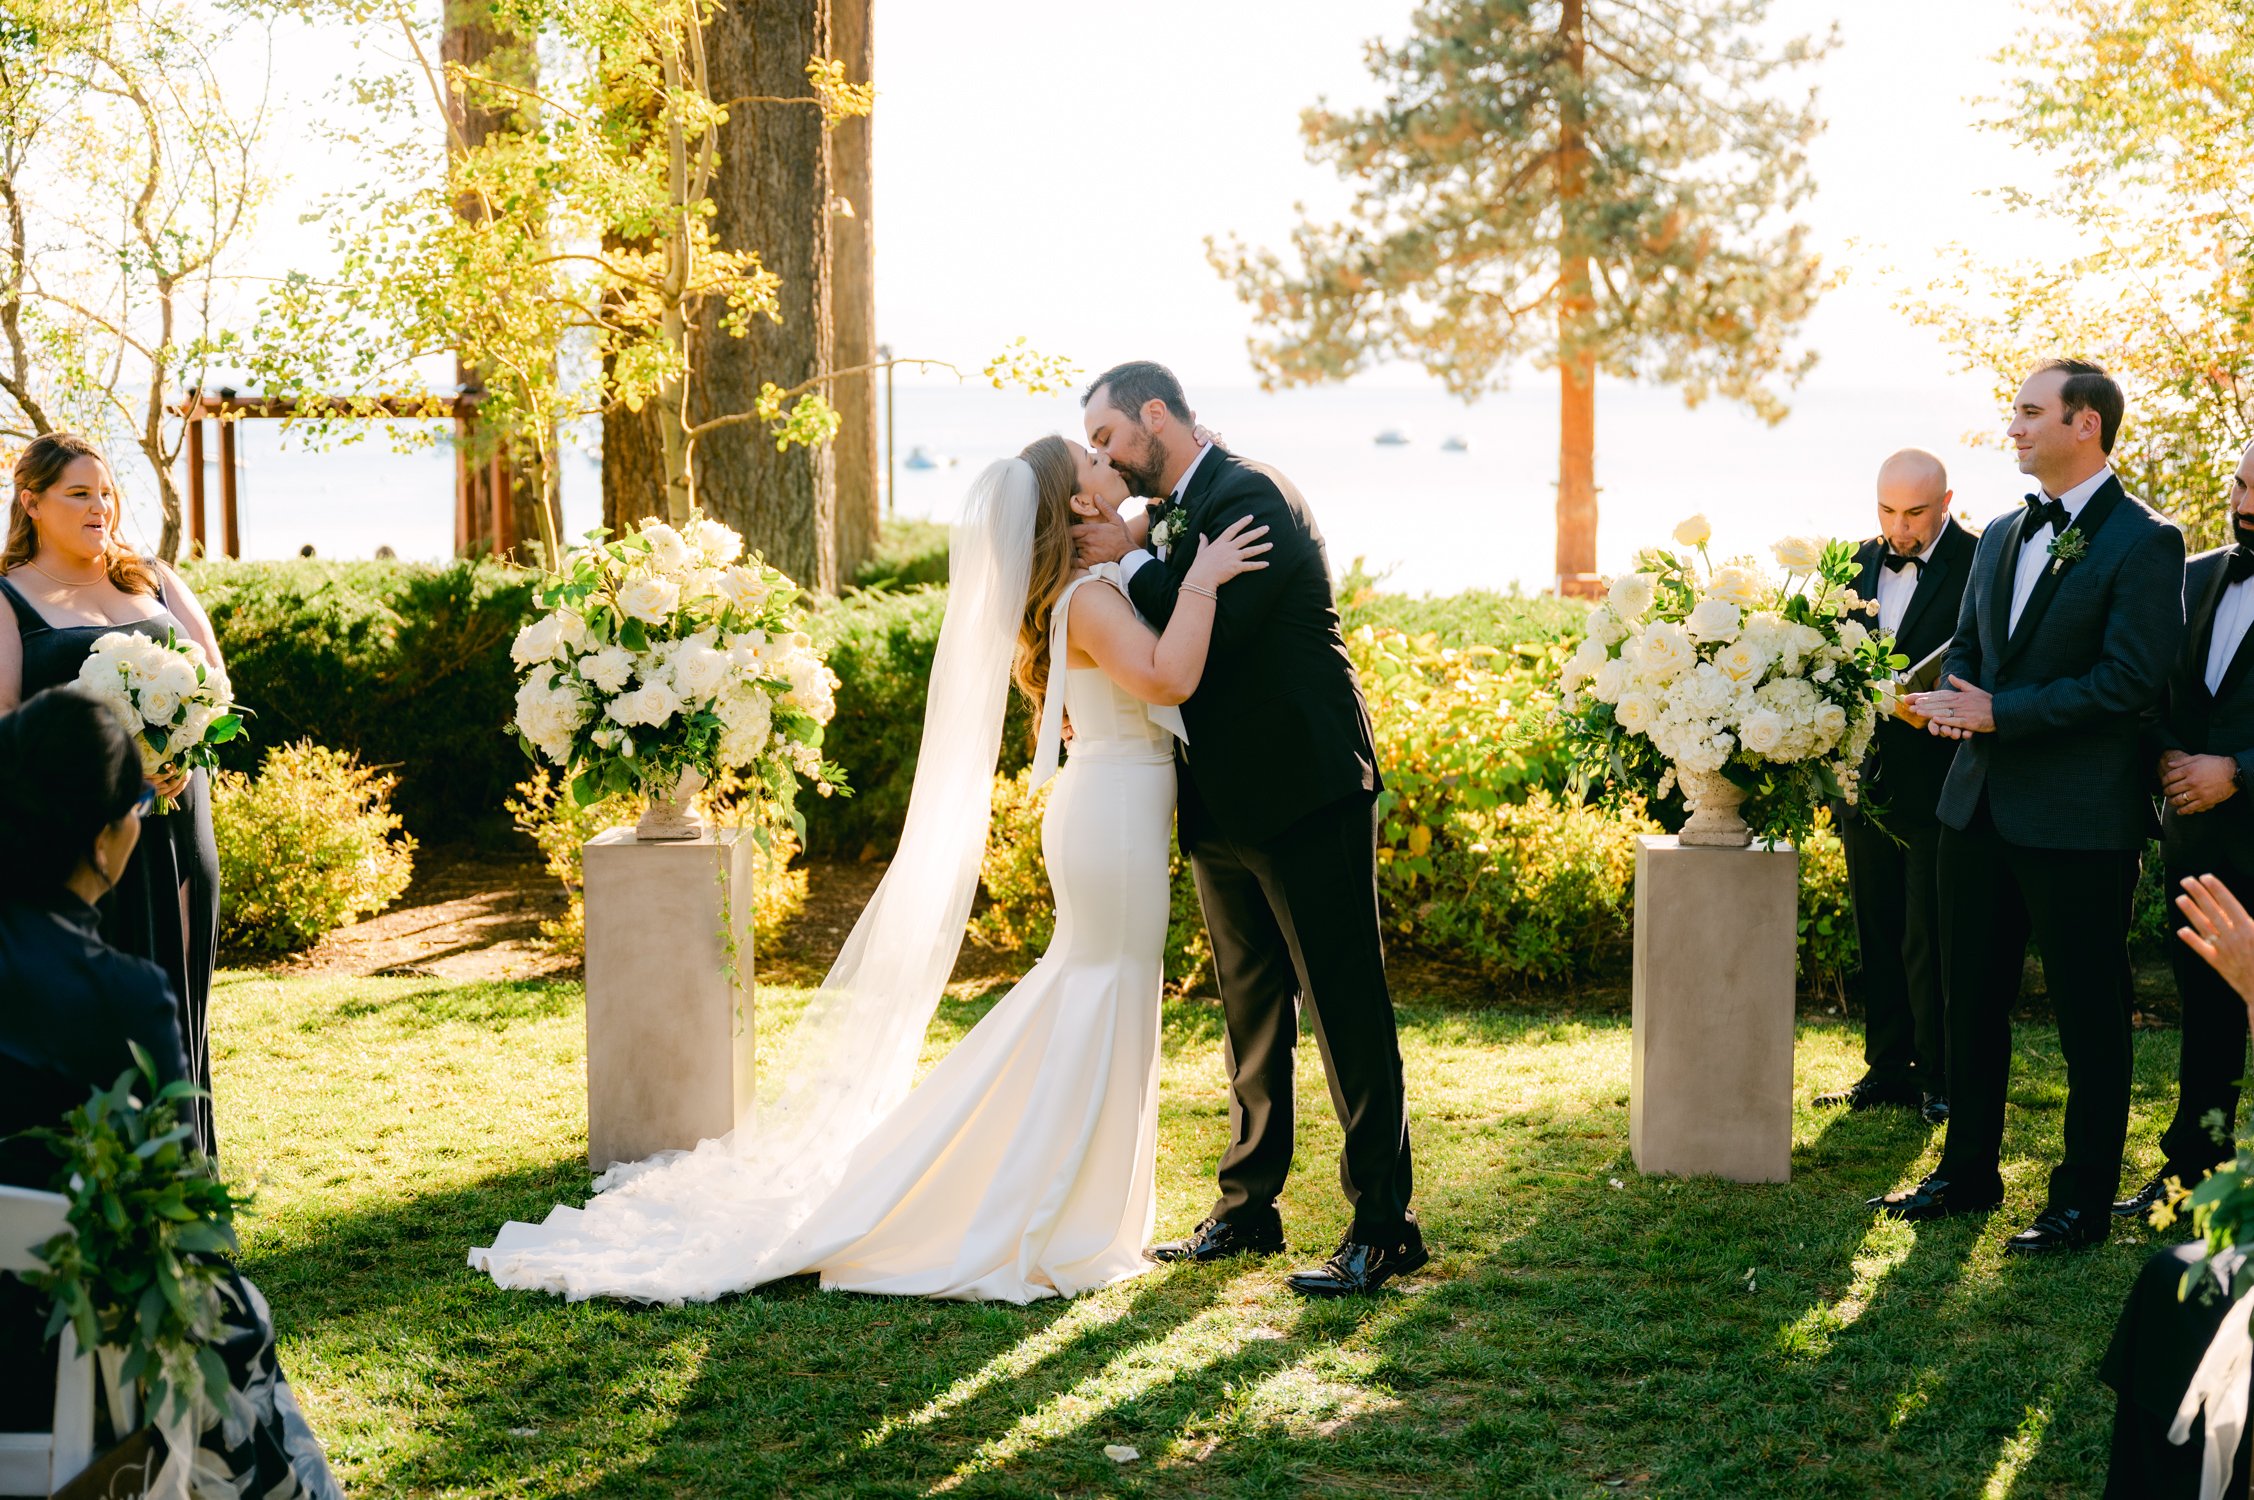 Hyatt Lake Tahoe wedding, photo of couple during their first kiss